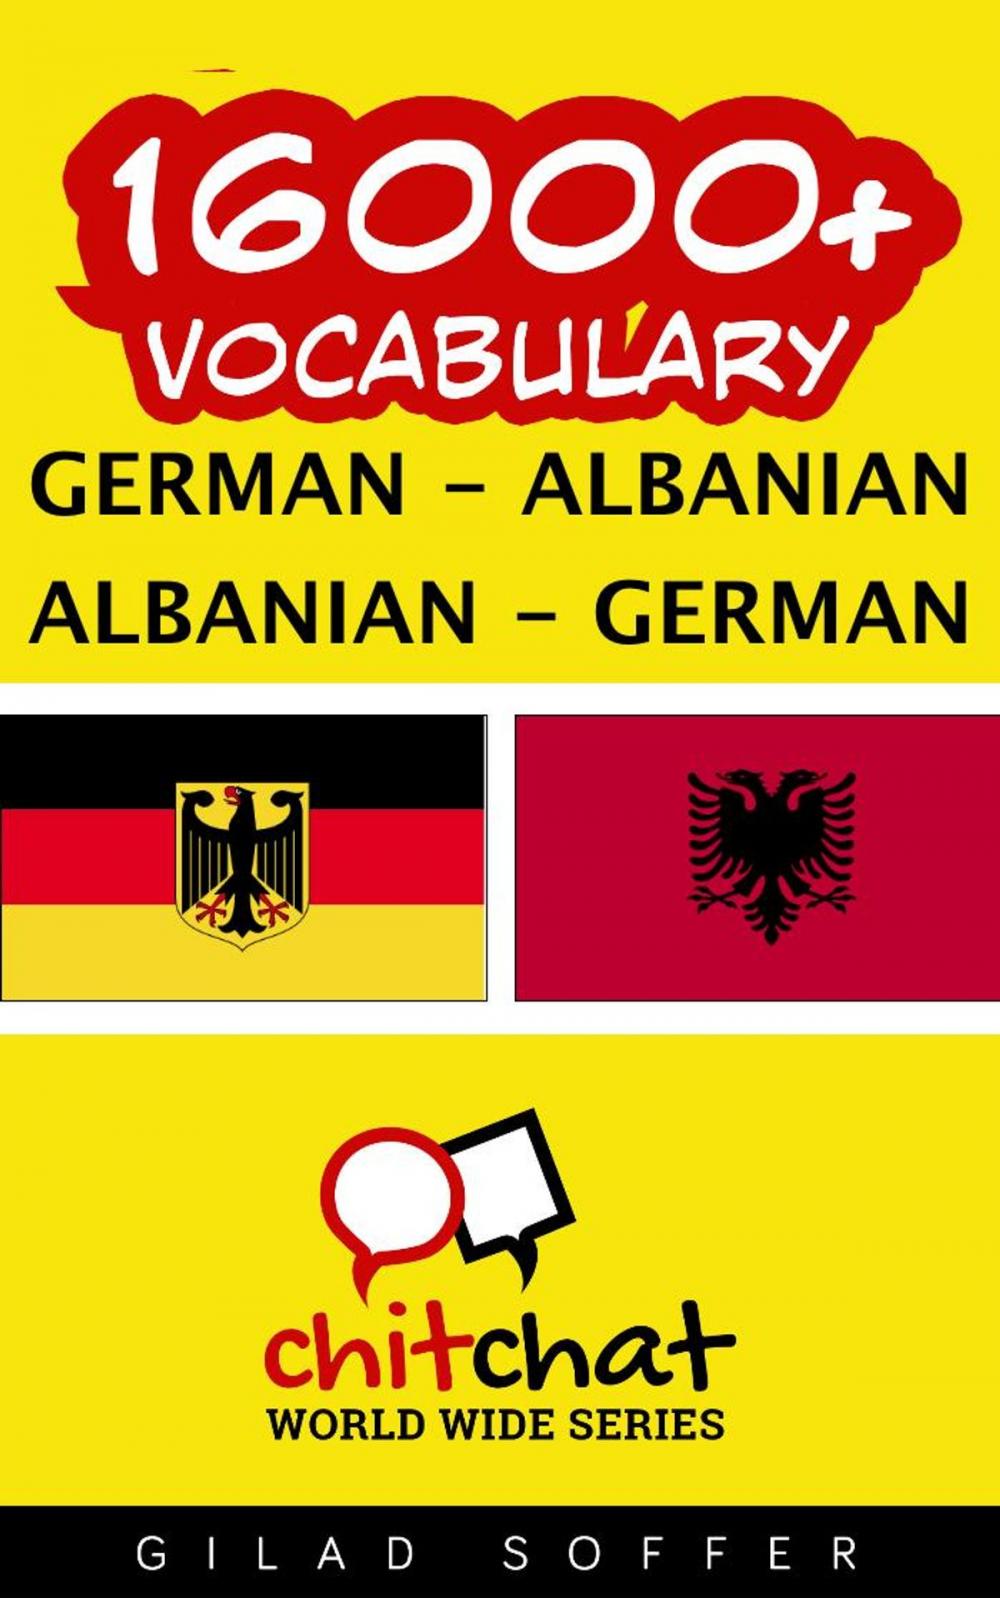 Big bigCover of 16000+ Vocabulary German - Albanian